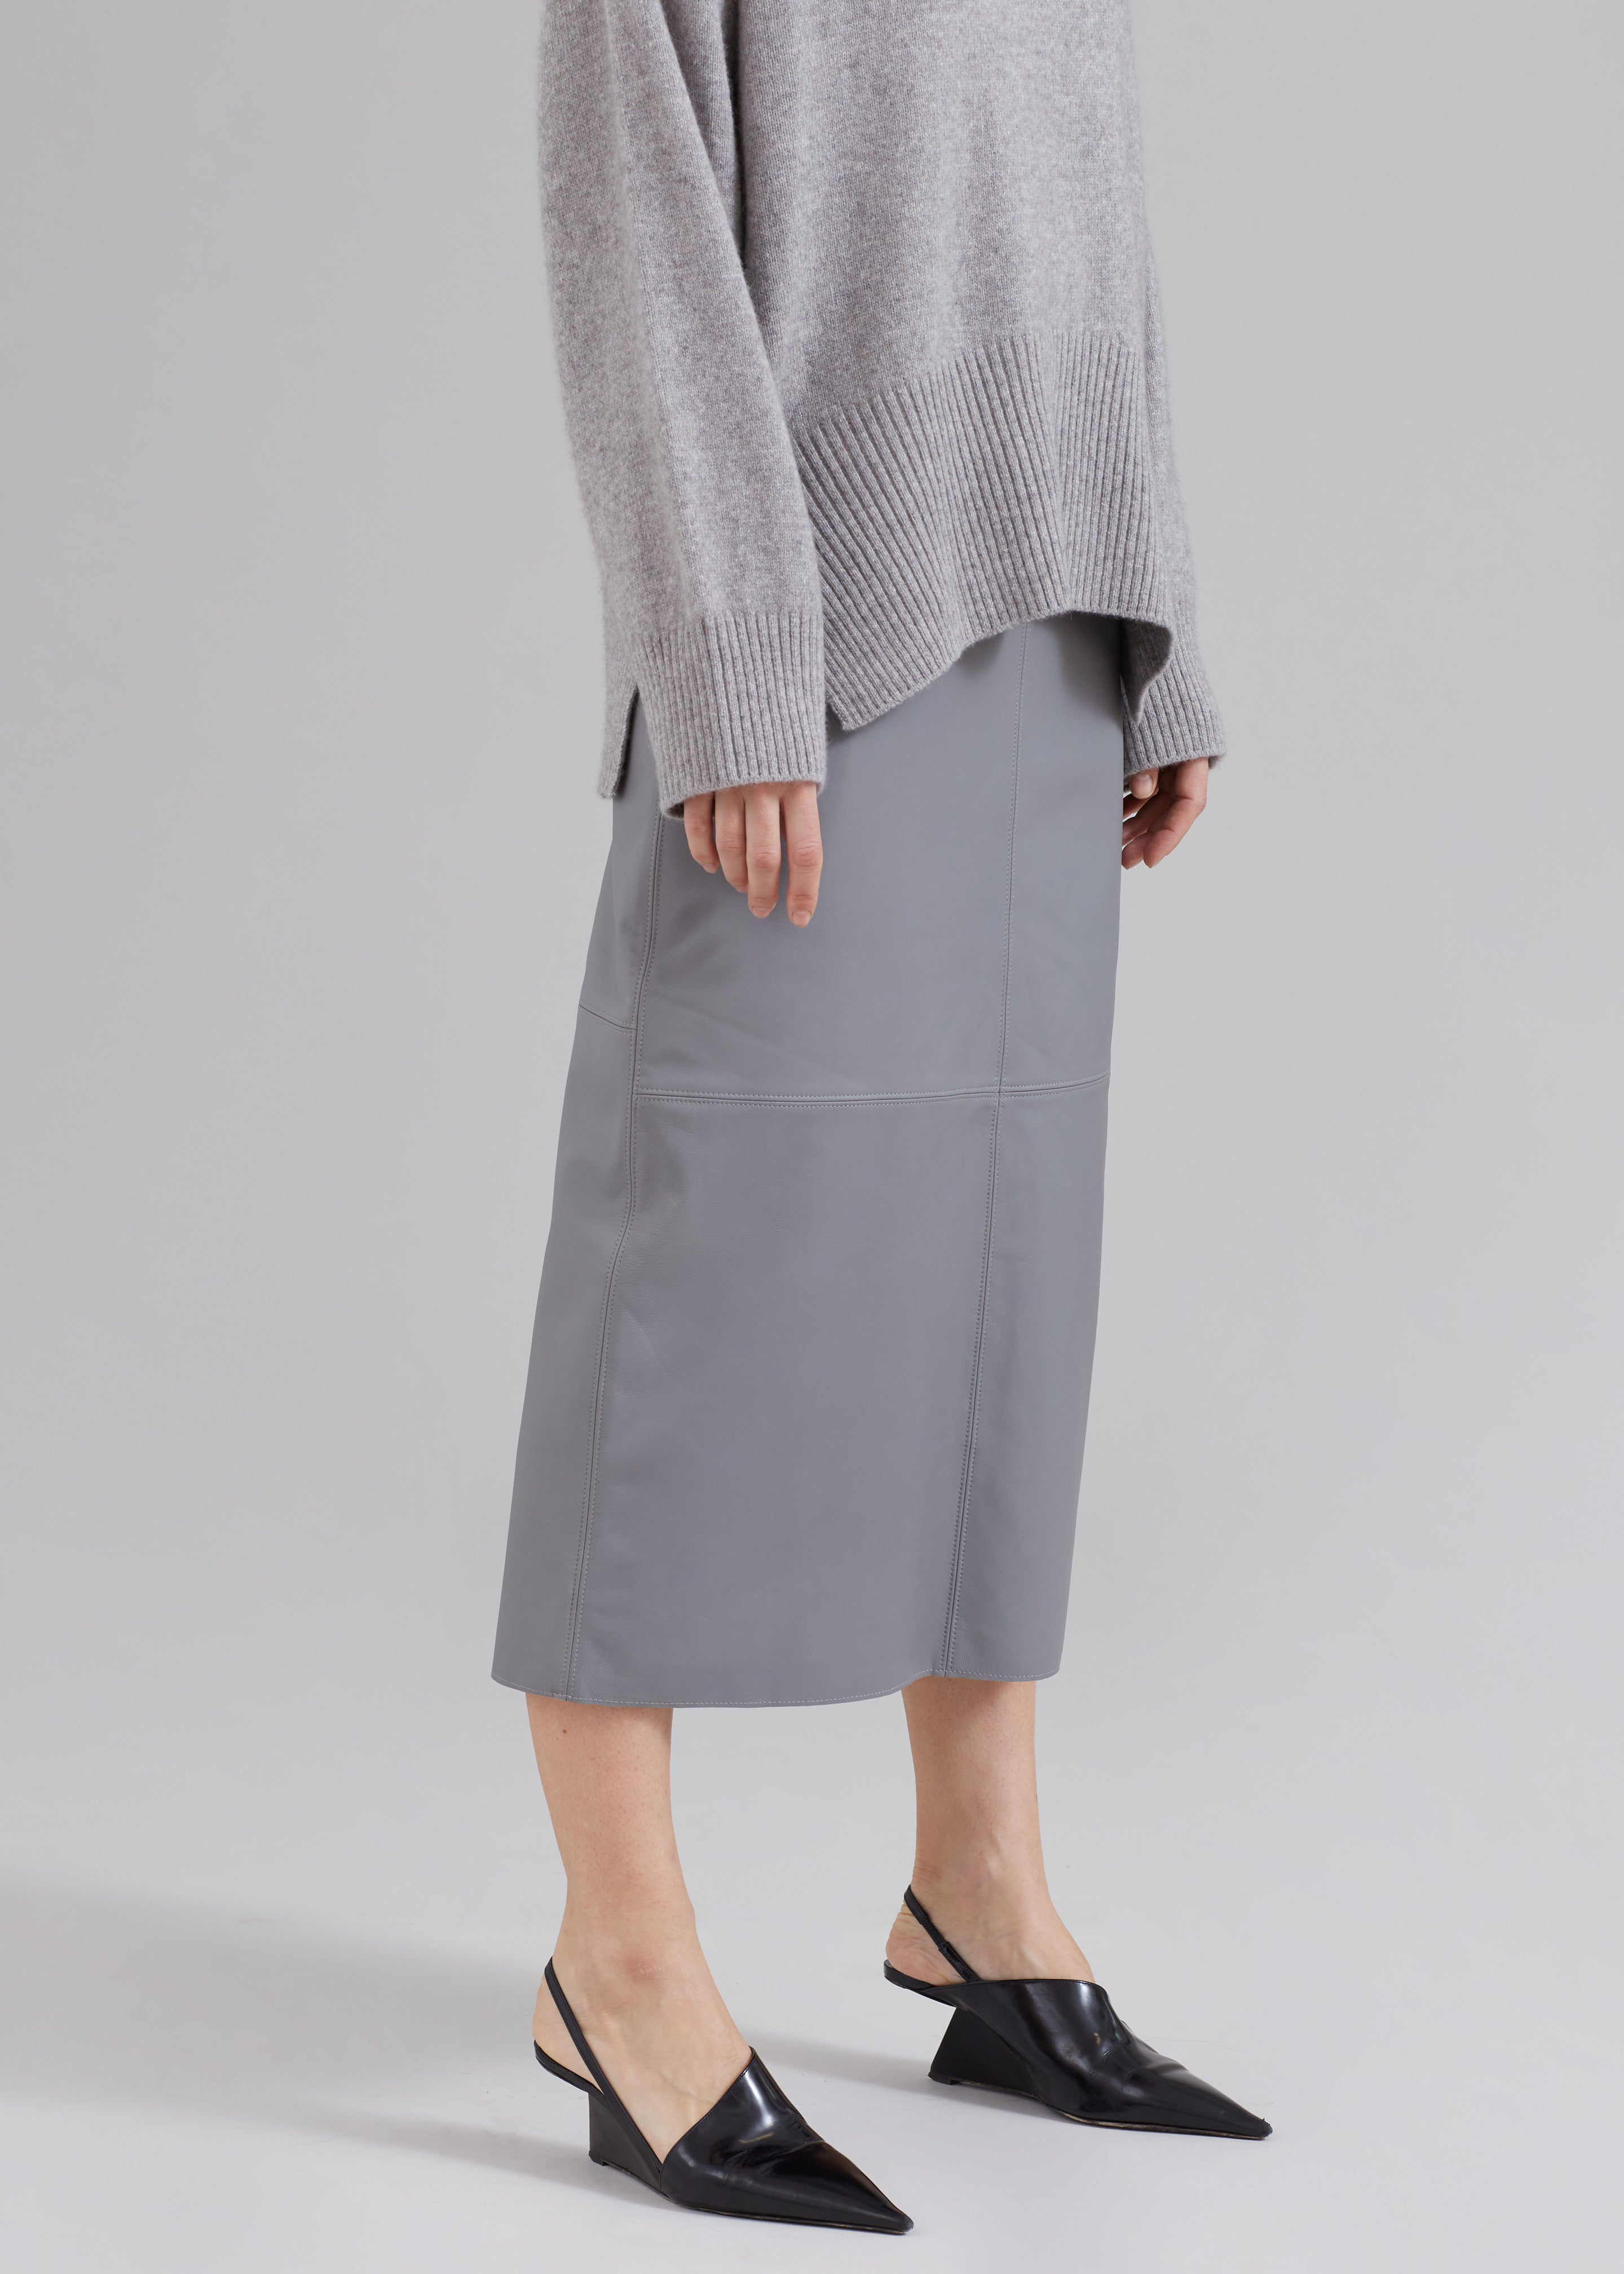 Heather Leather Pencil Skirt - Grey - 4